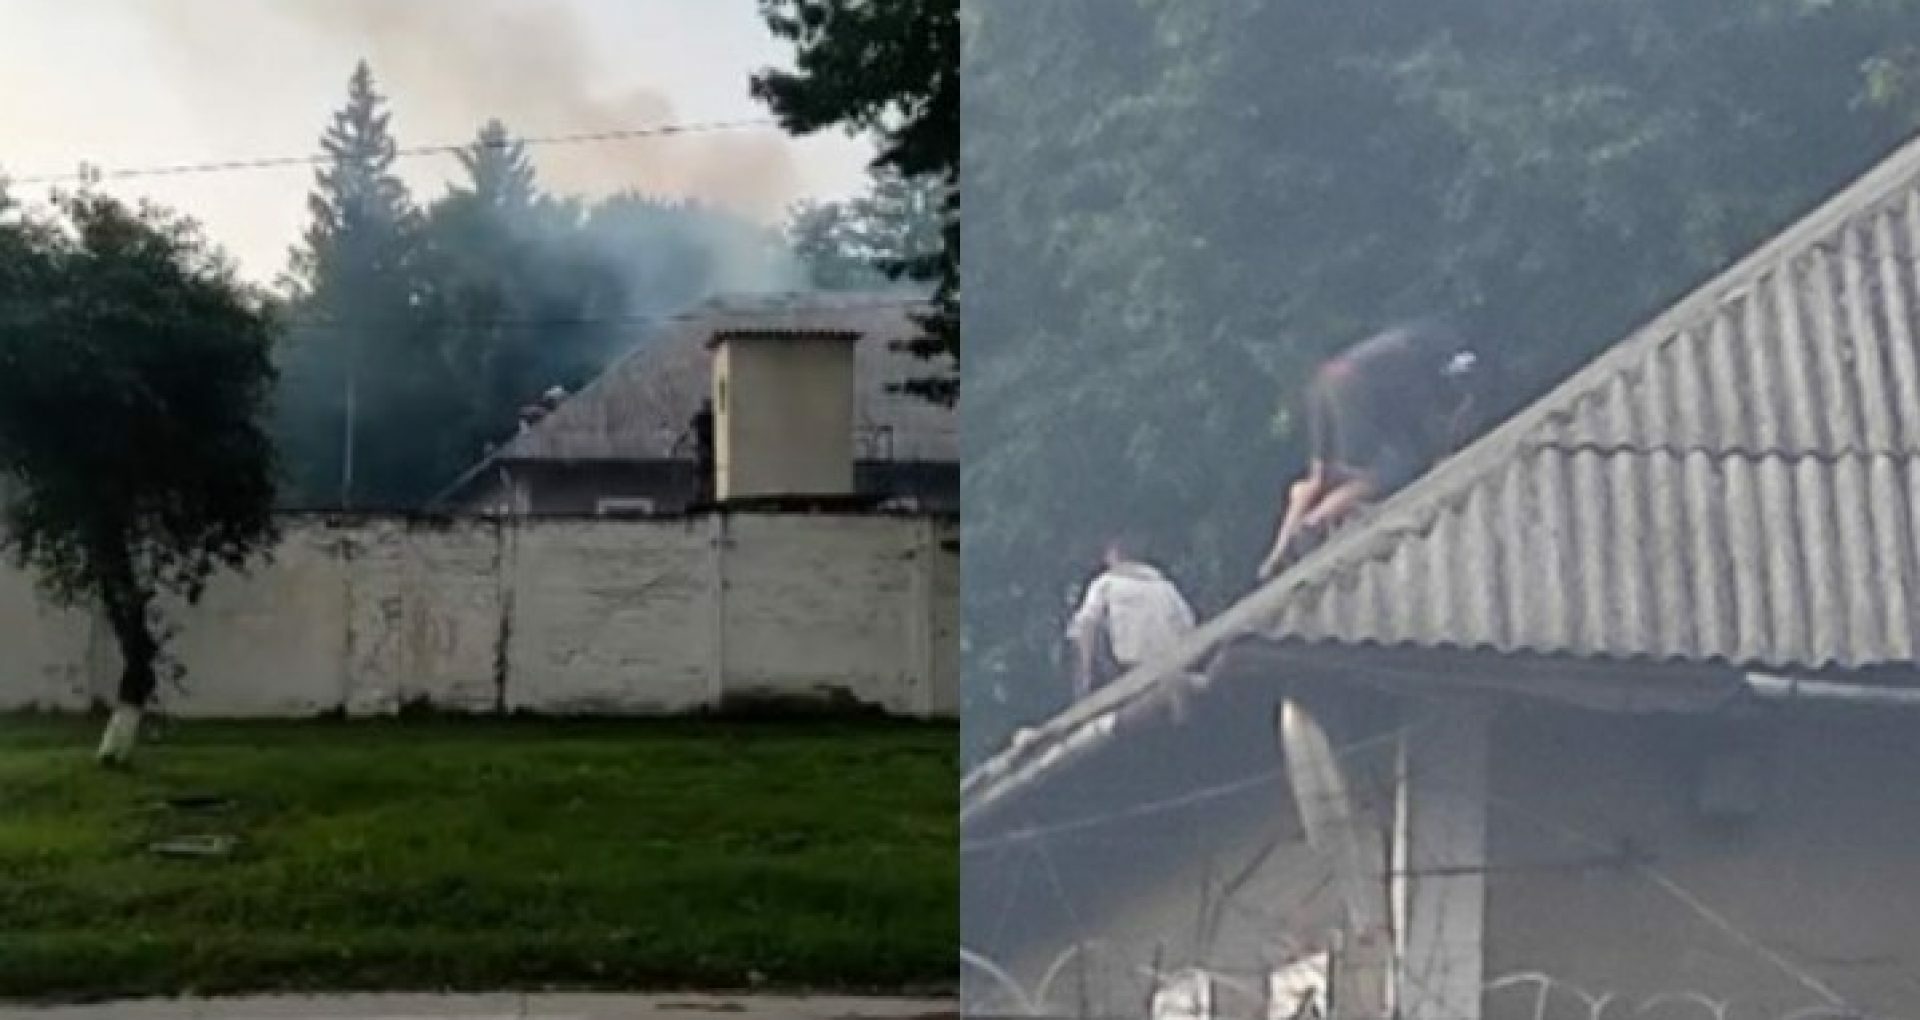 Several Detainees Put on Fire a Detention Block and Tried to Escape Prison  – Ziarul de Gardă